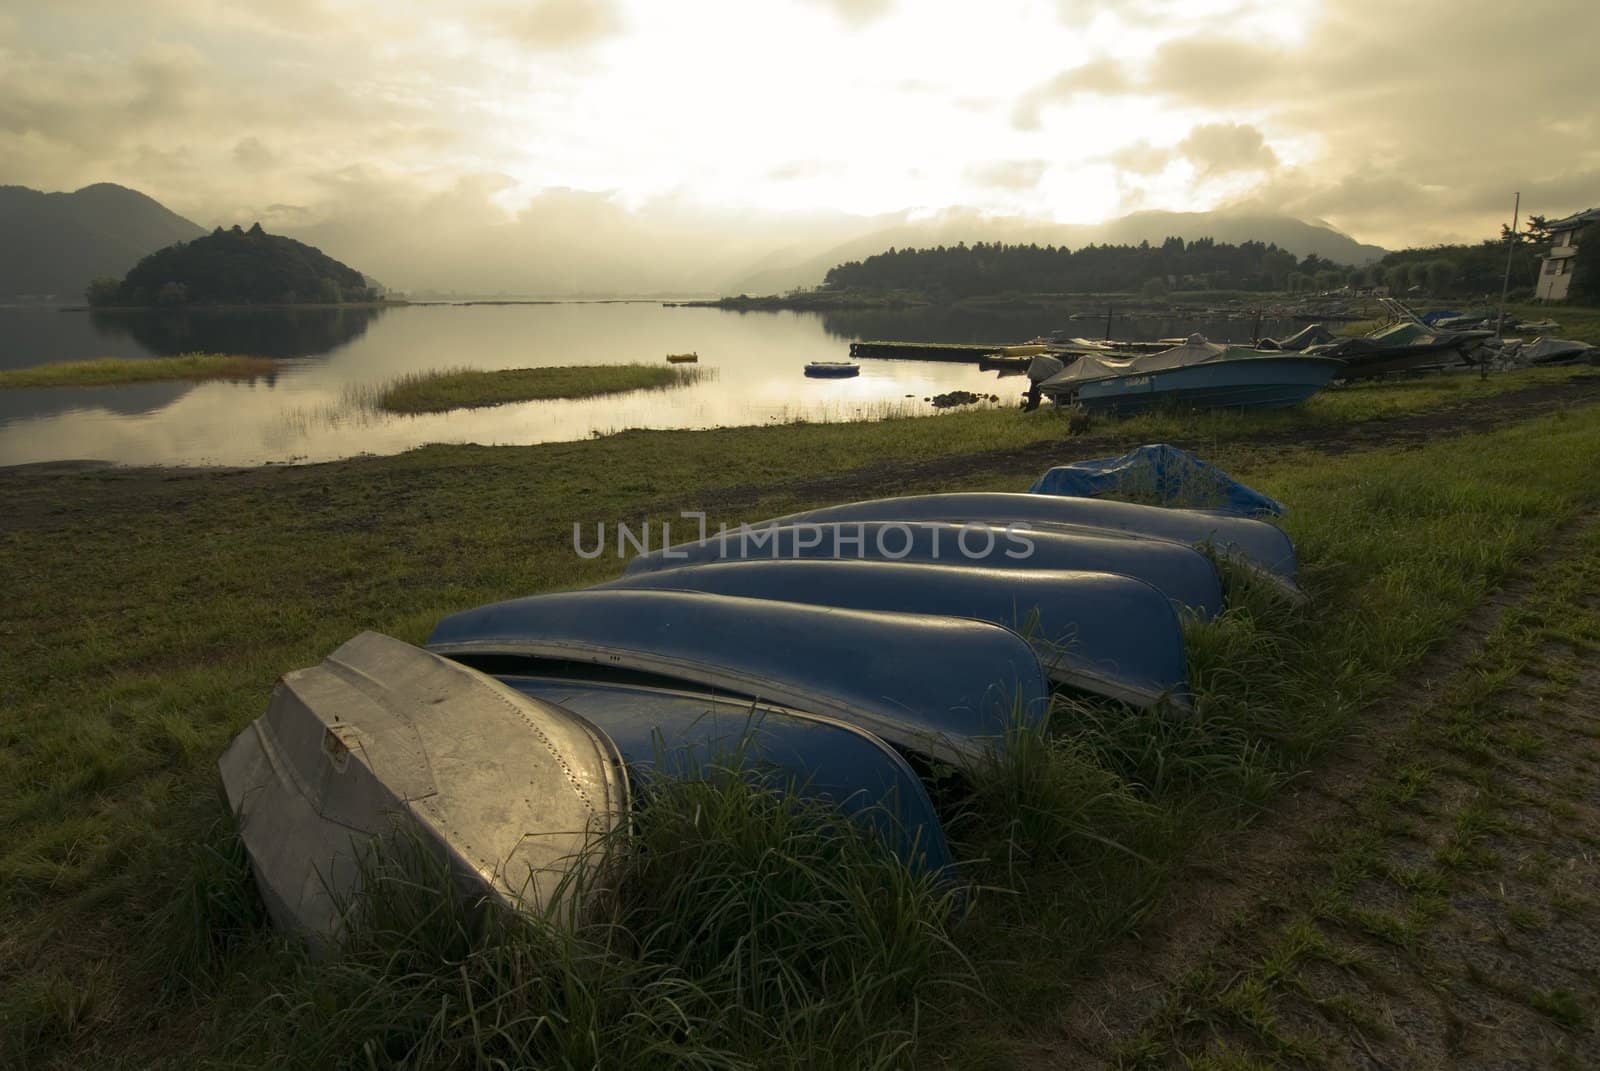 rural warm morning scenery with blue boats close to mountain lake's  waters, Lake Kawaguchi, Japan